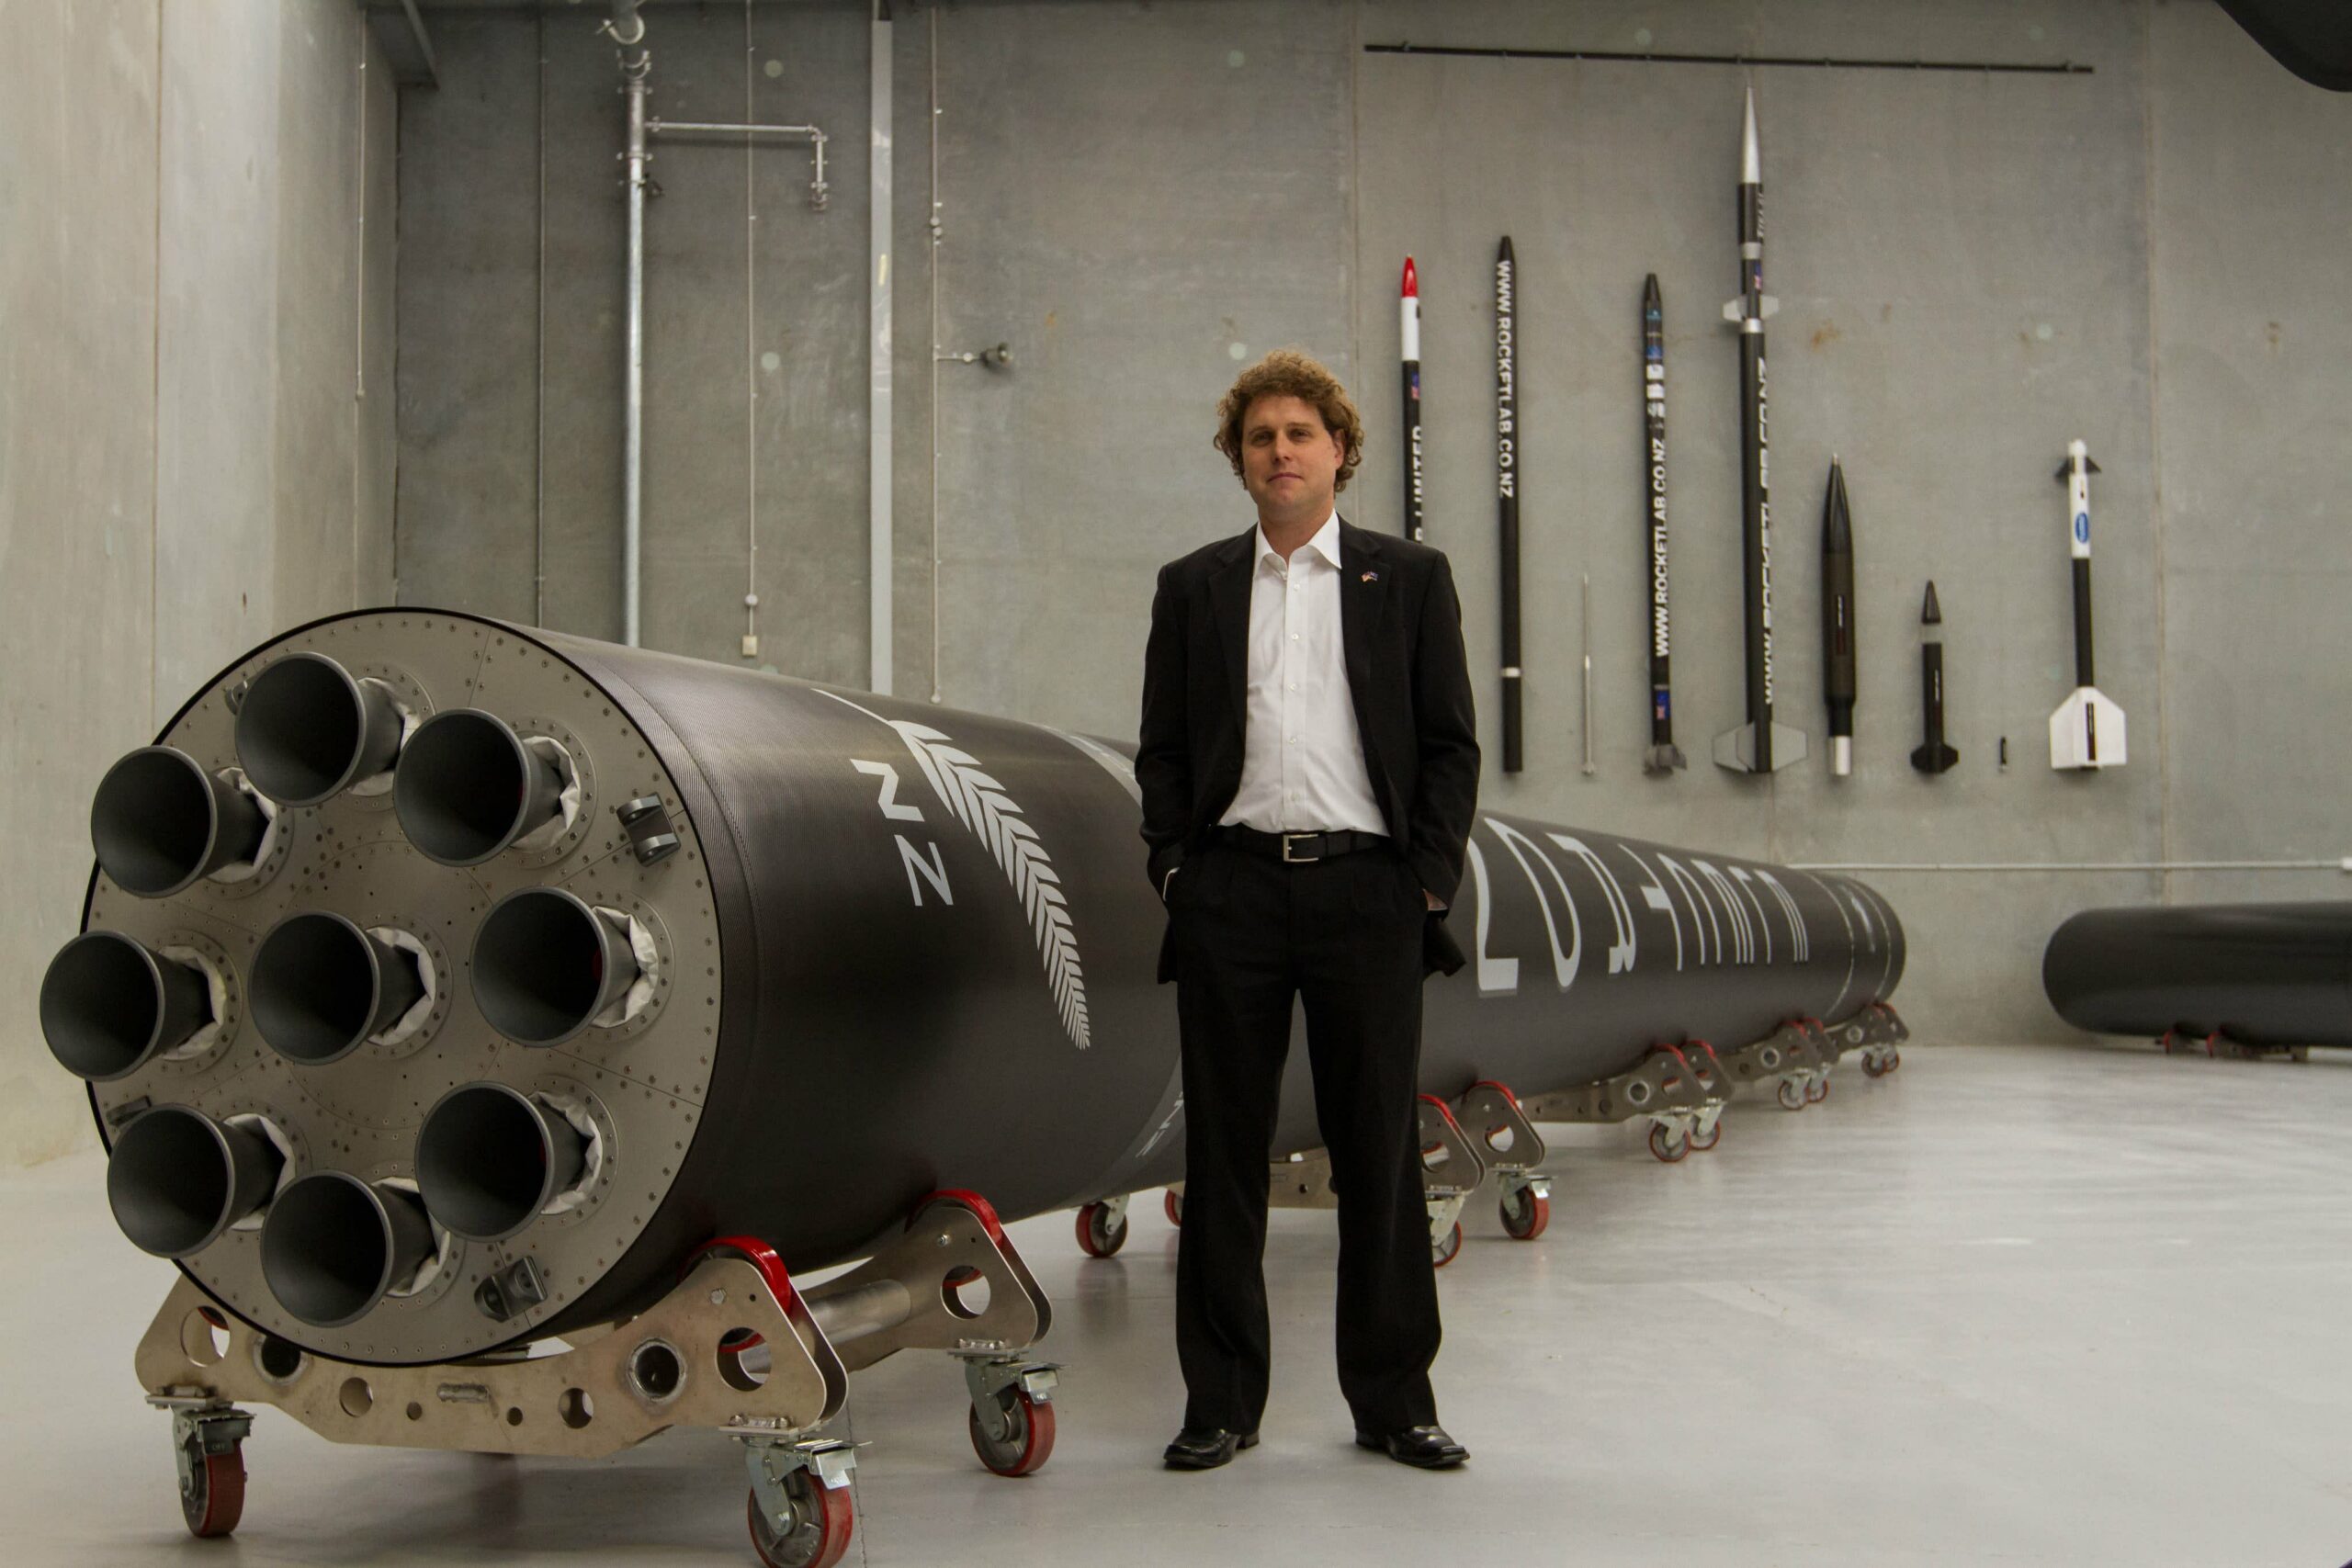 Rocket Lab going public through SPAC with Neutron rocket growth